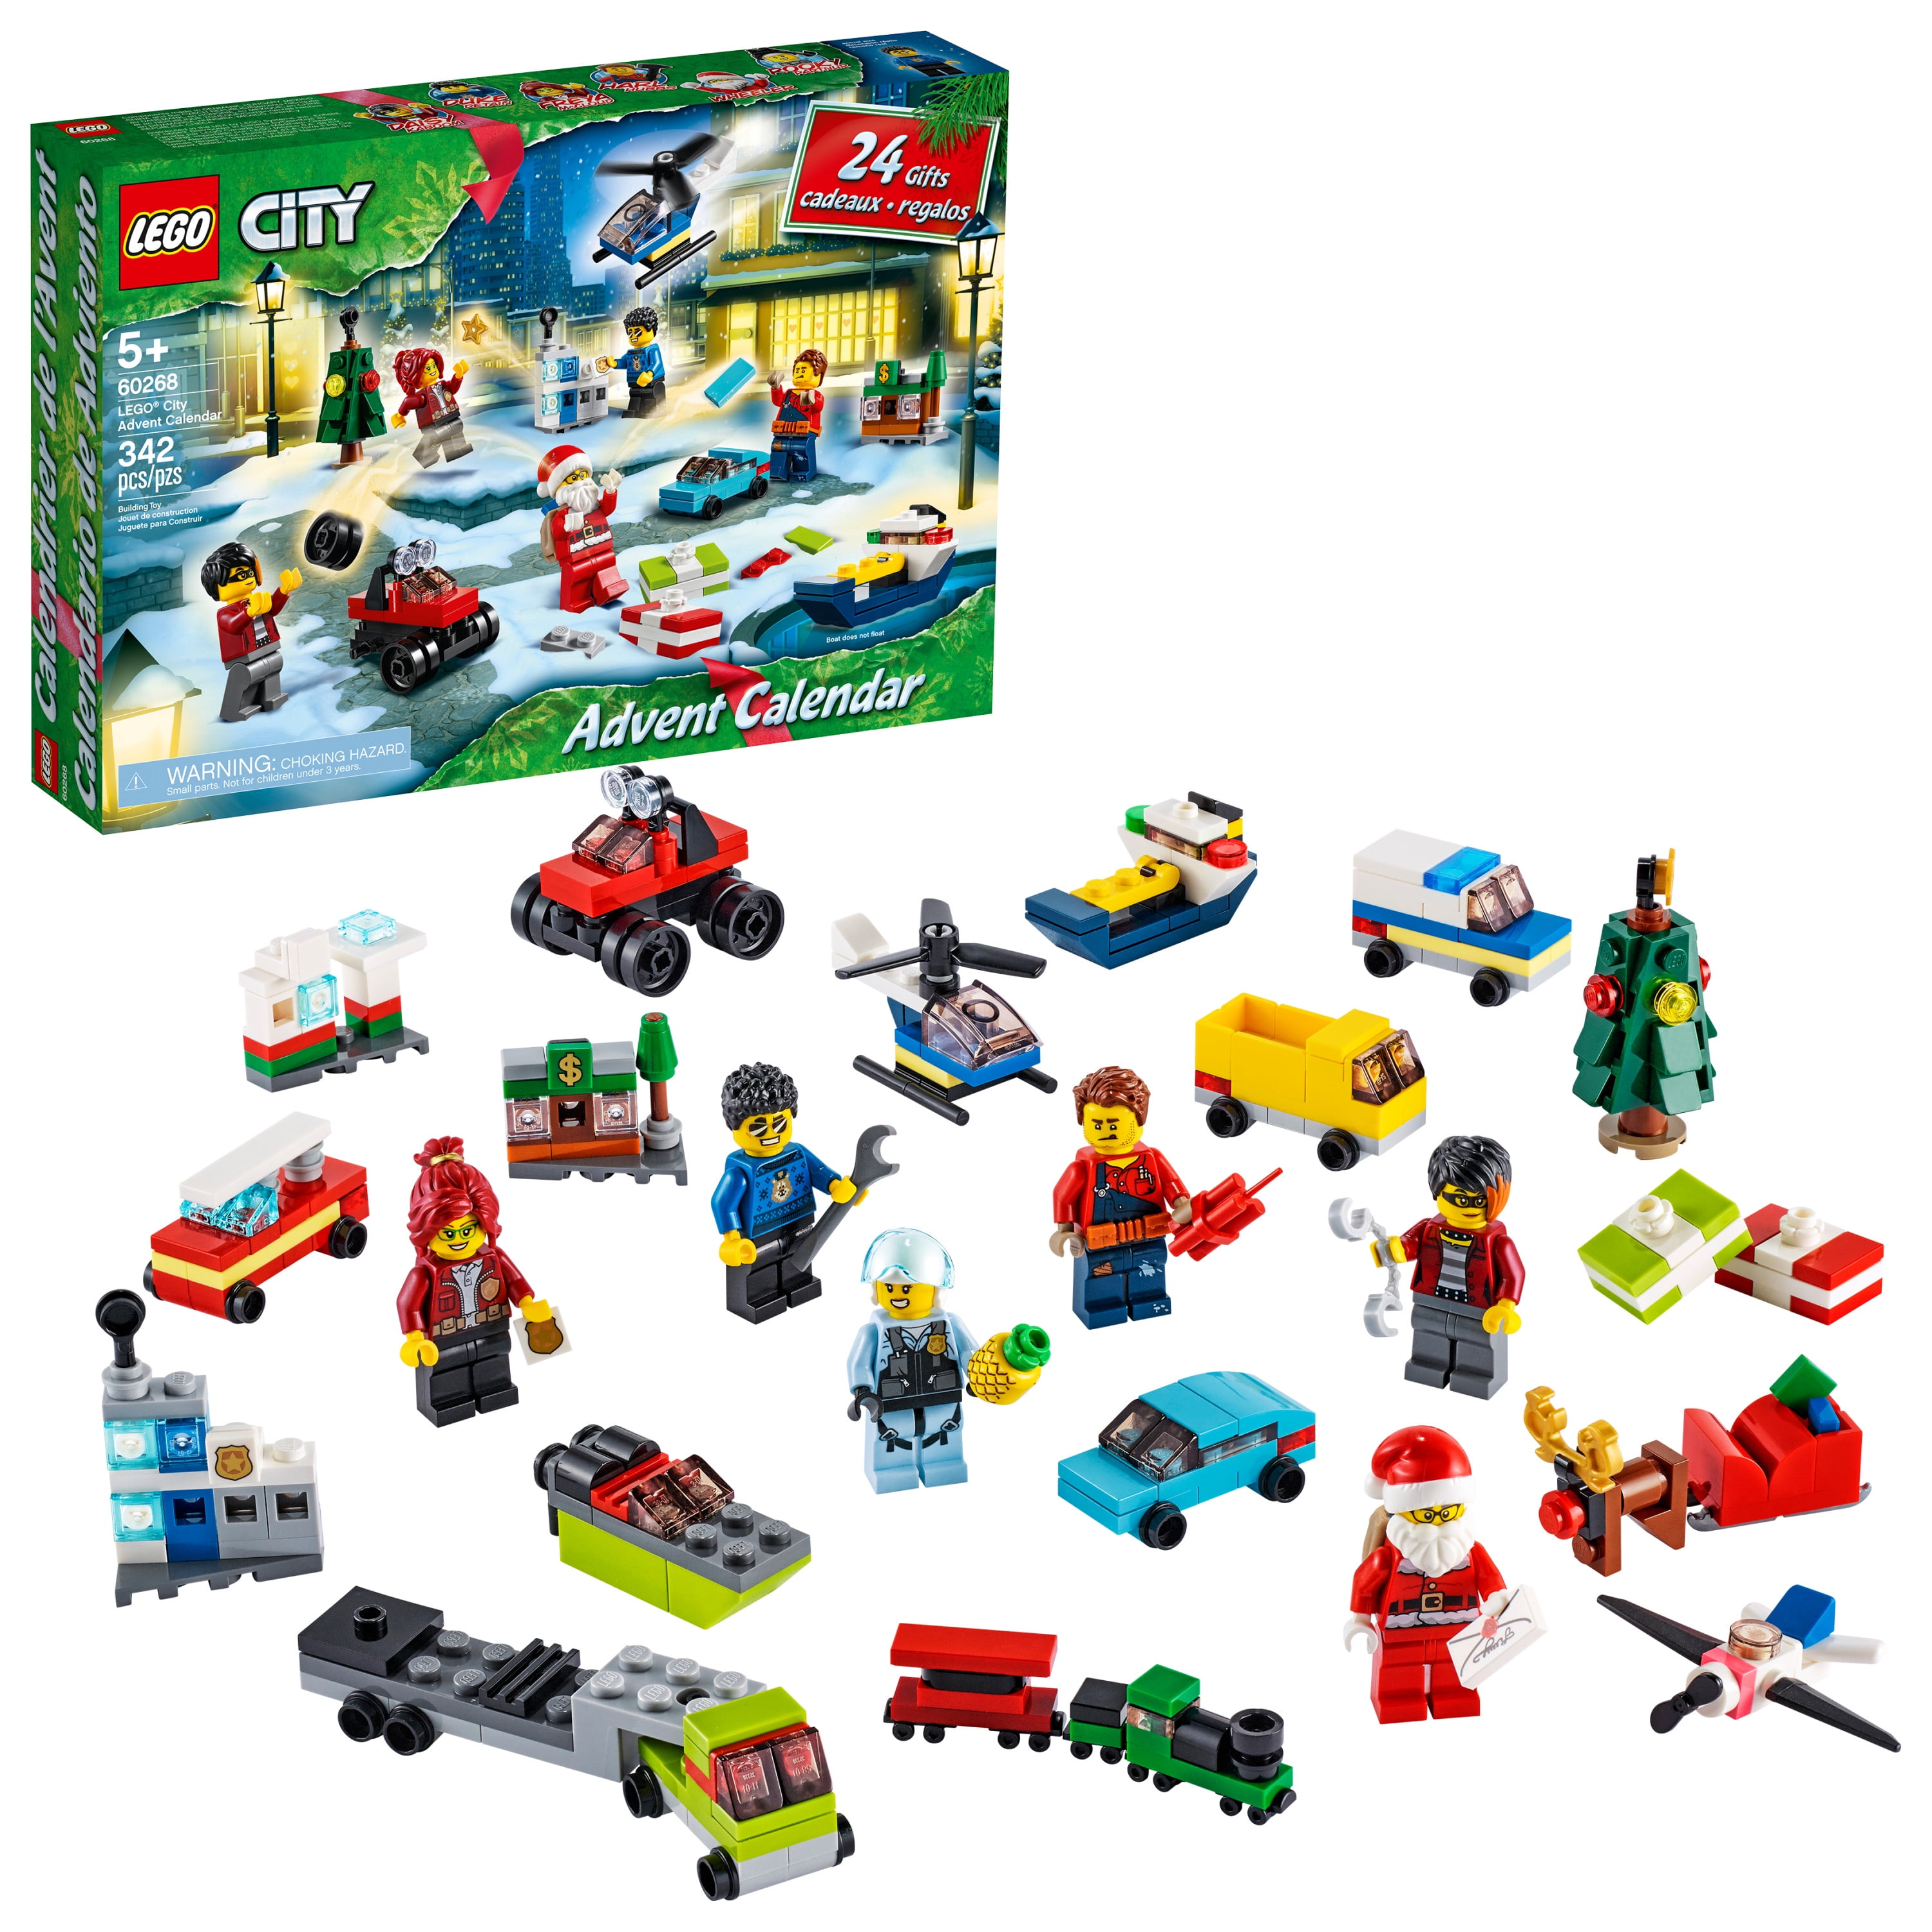 234 Pieces New 2019 LEGO City Advent Calendar 60235 Building Kit